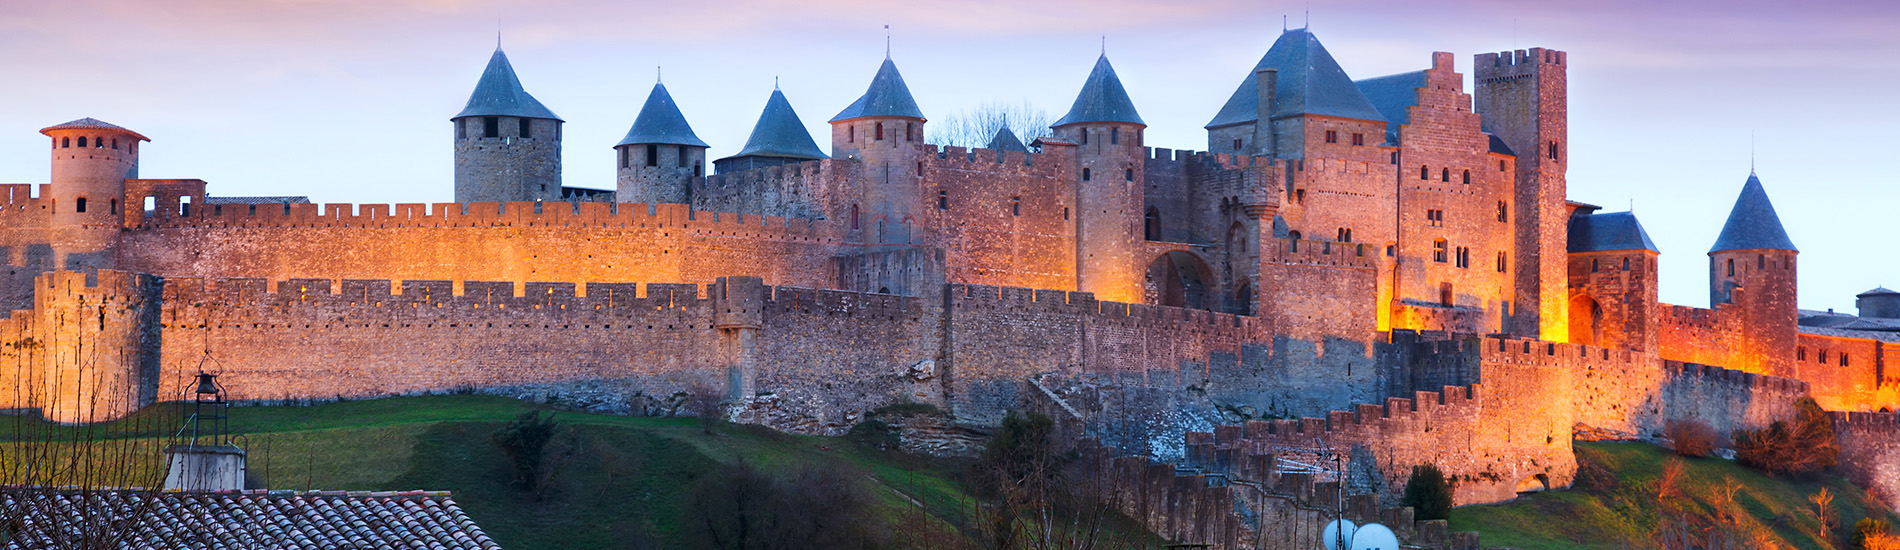 Carcassonne城堡